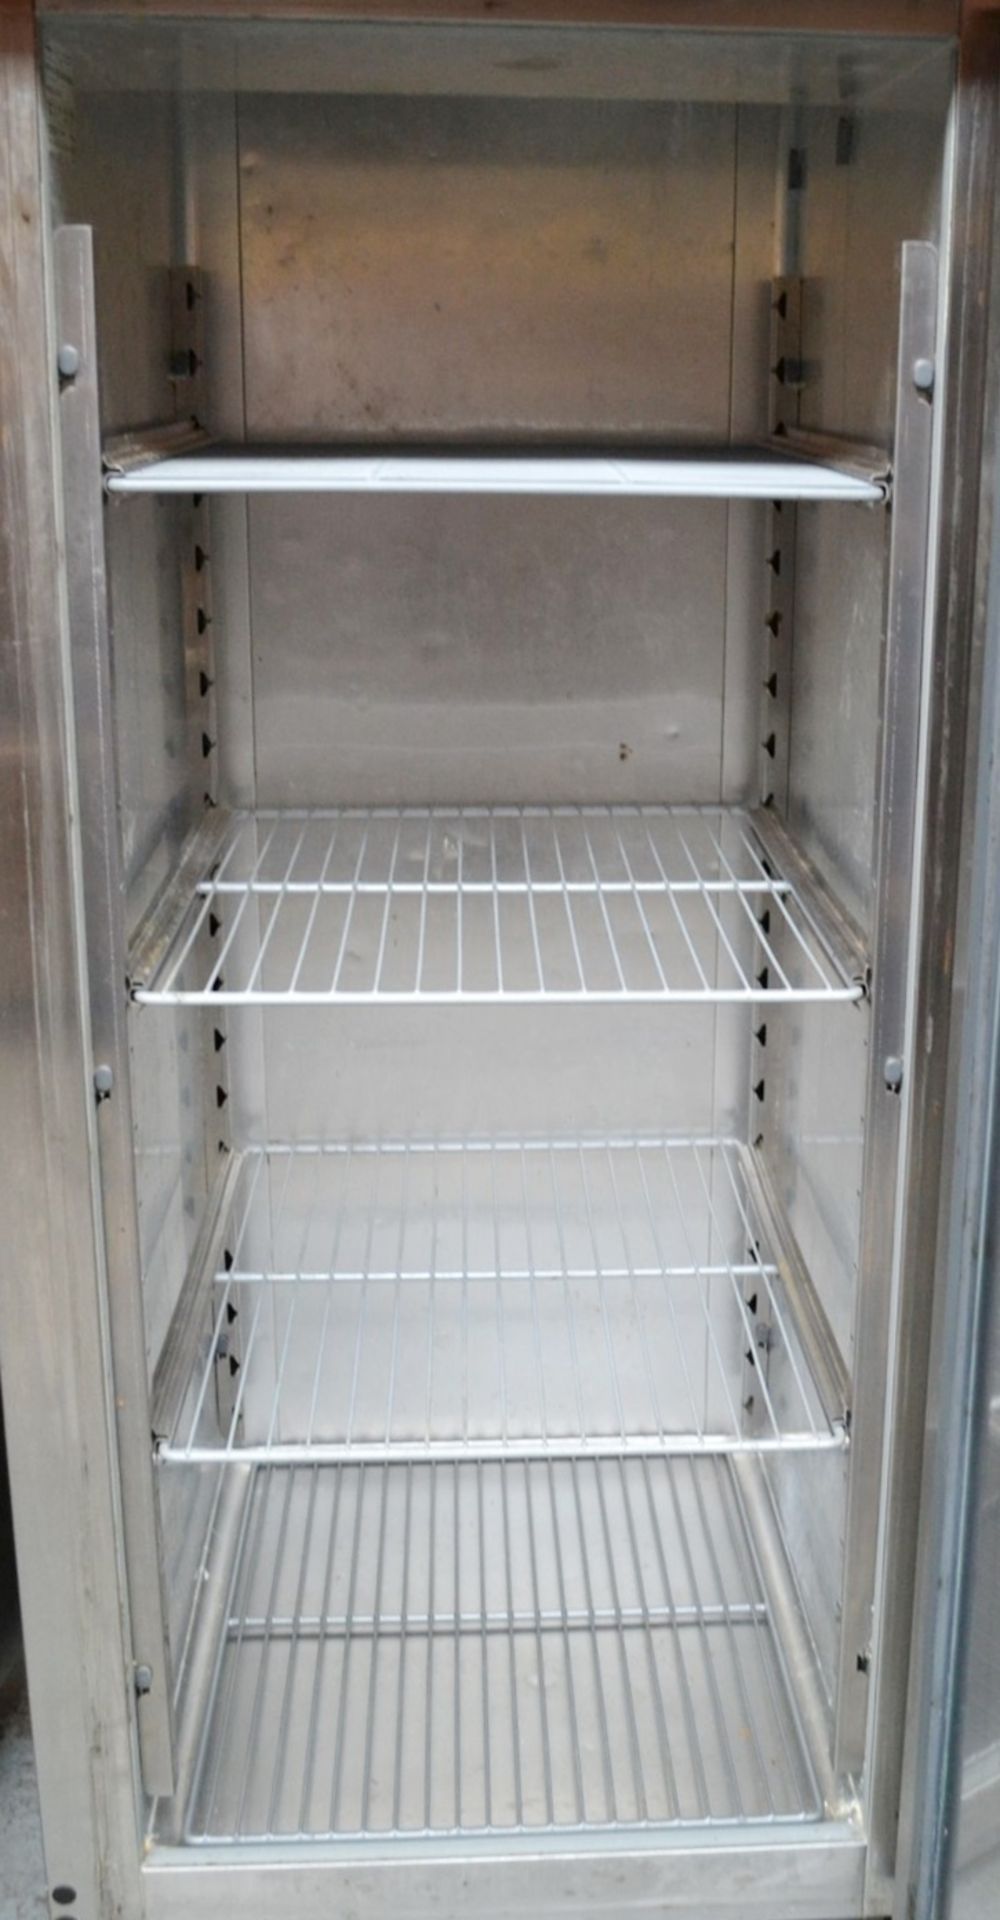 1 x Williams Stainless Steel Single Door Upright Freezer - Model: LJ1SARI - 400 Litre - W74 x 82 x - Image 4 of 7